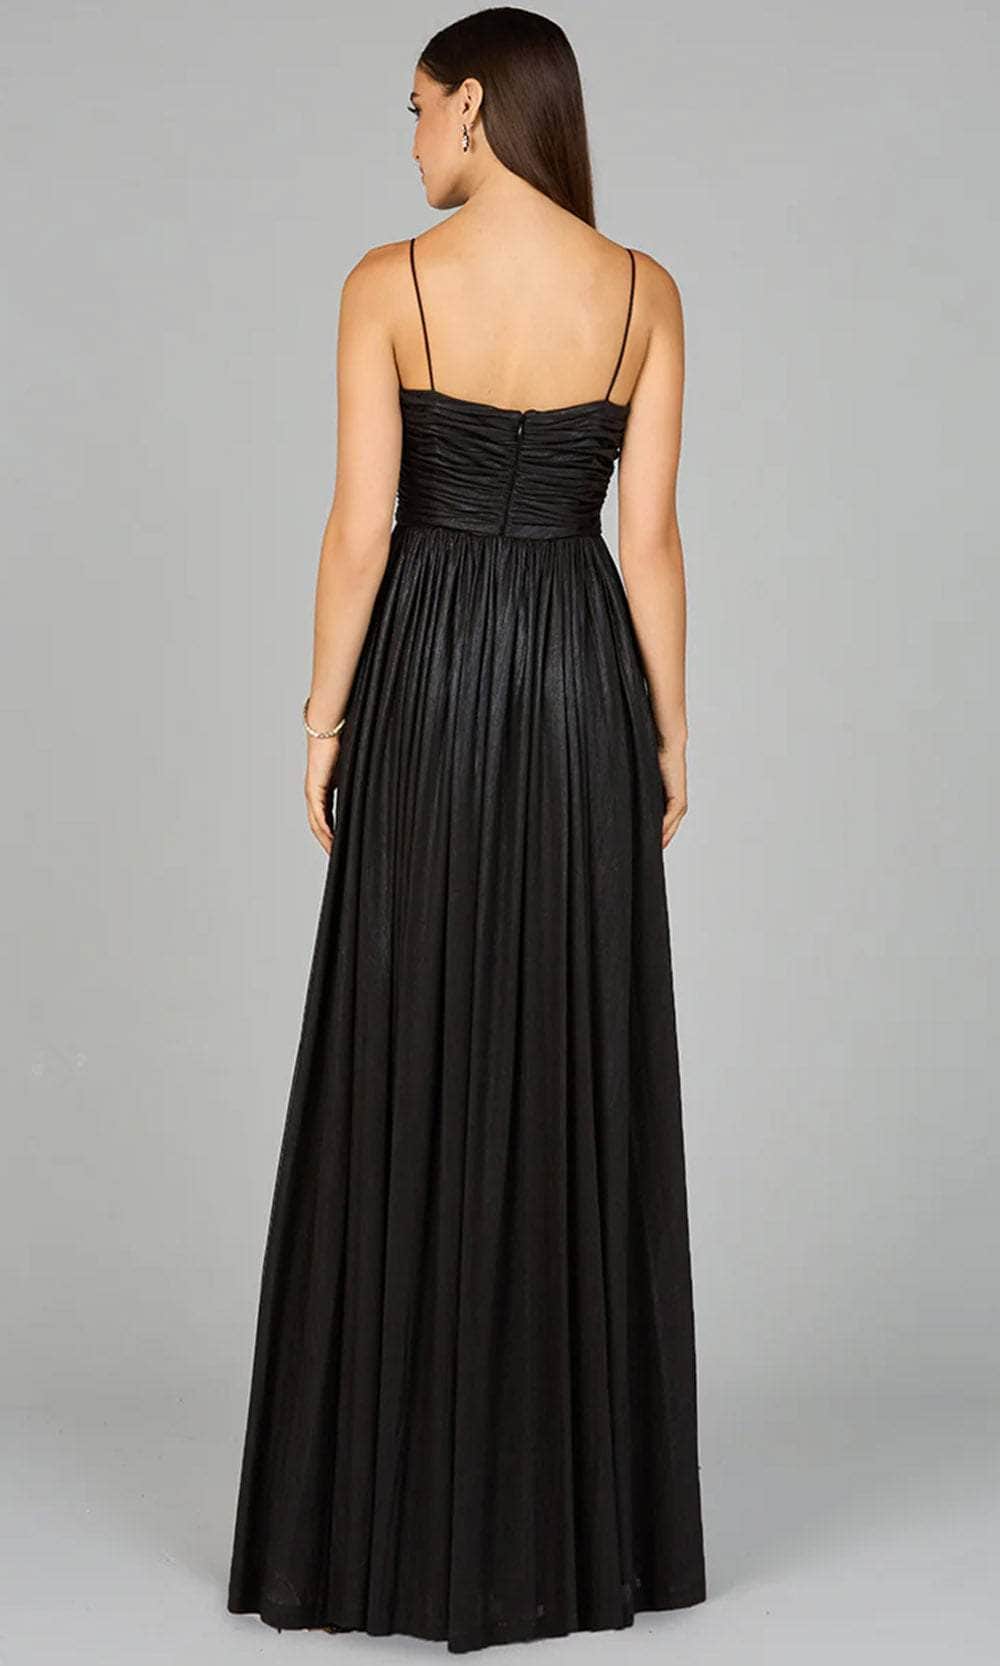 Lara Dresses 8120 - Metallic A-Line Evening Gown